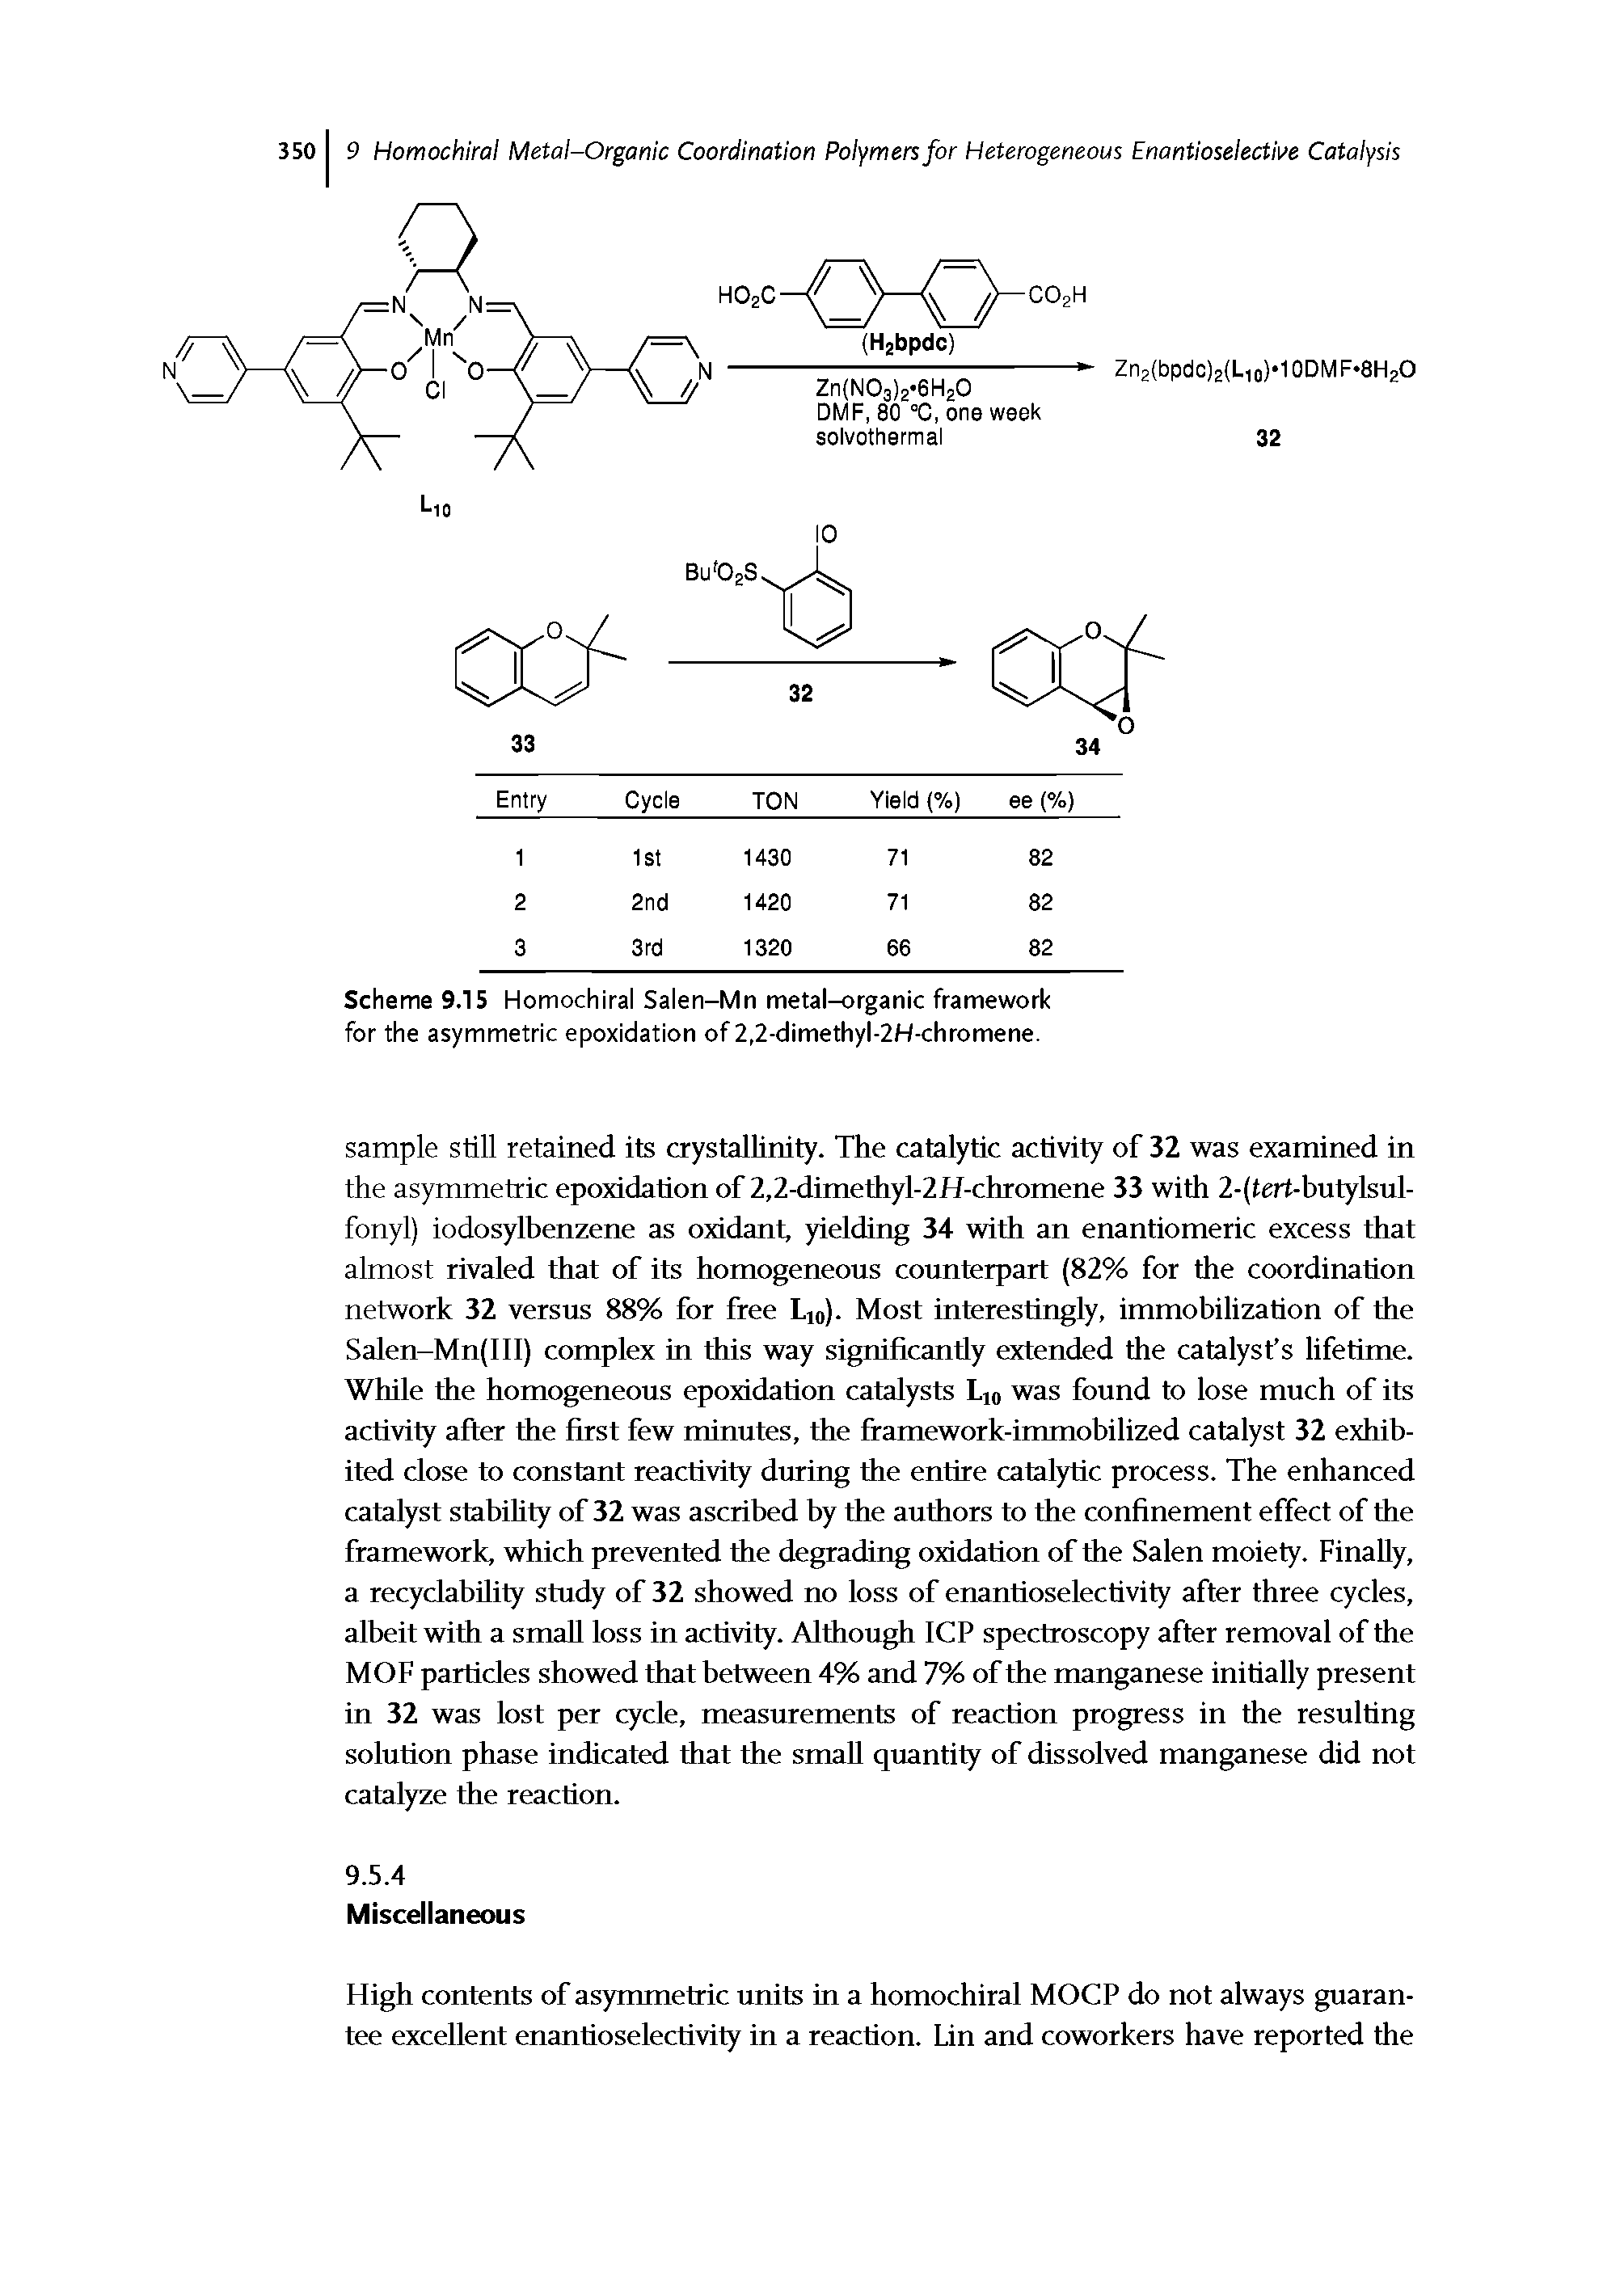 Scheme 9.15 Homochiral Salen-Mn metal-organic framework for the asymmetric epoxidation of 2,2-dimethyl-2H-chromene.